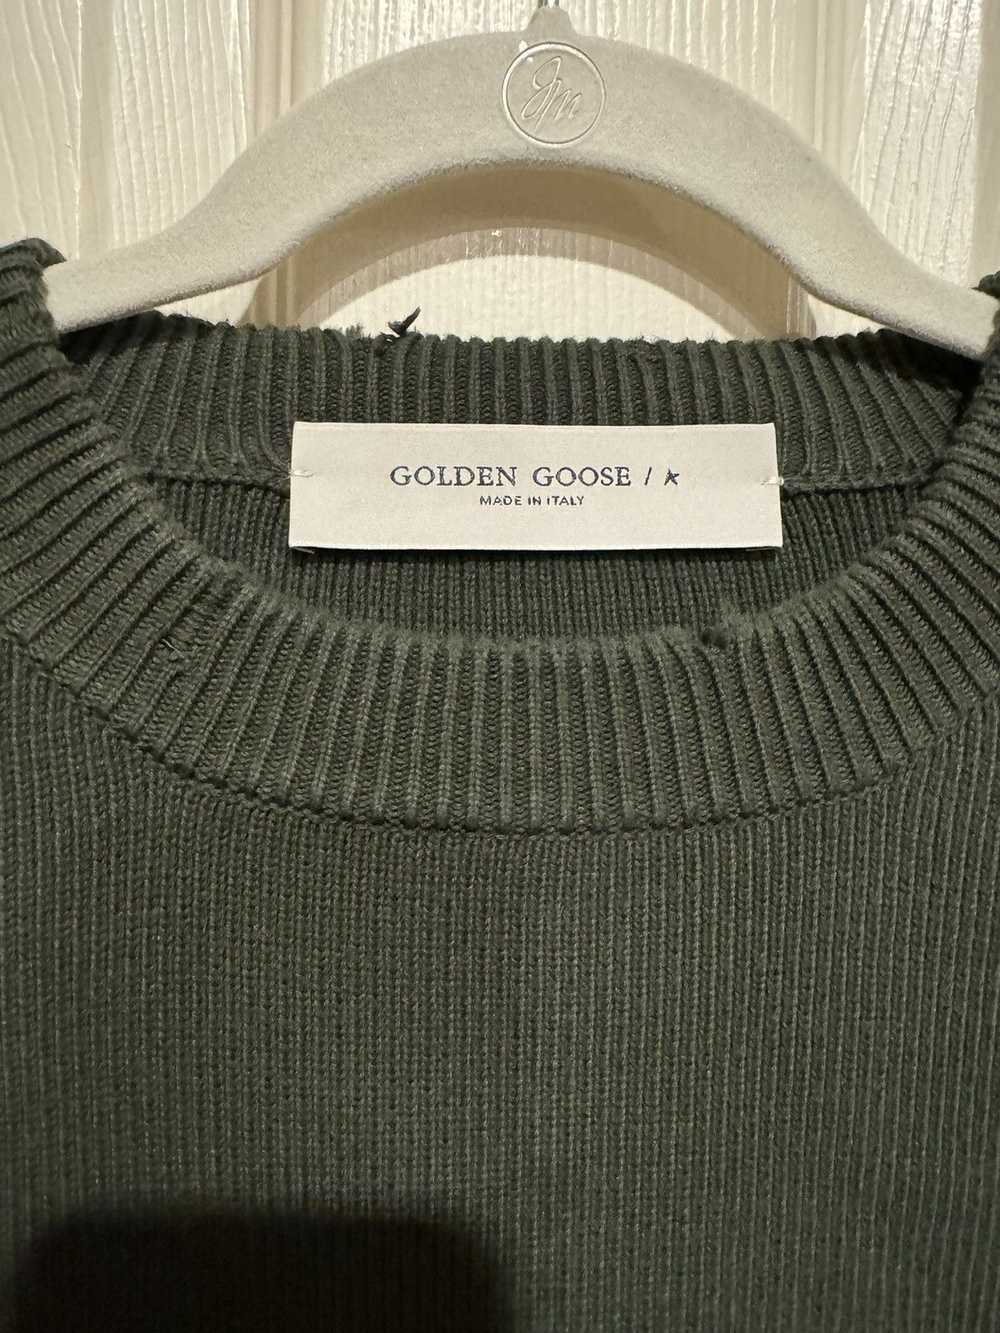 Golden Goose Golden Goose cotton knit sweater - image 3